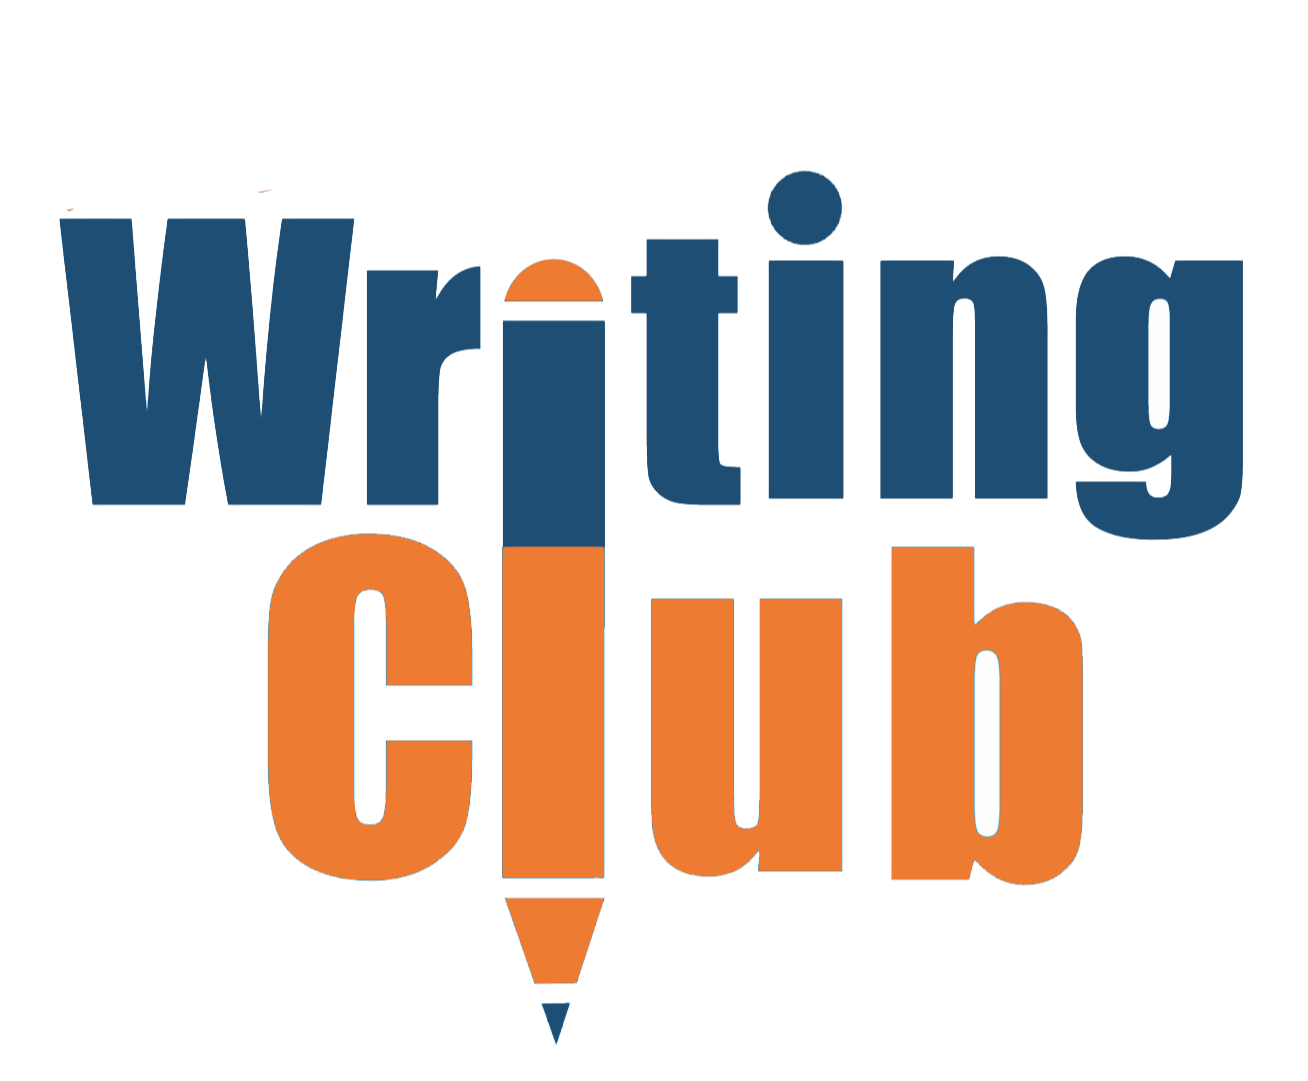 writing club